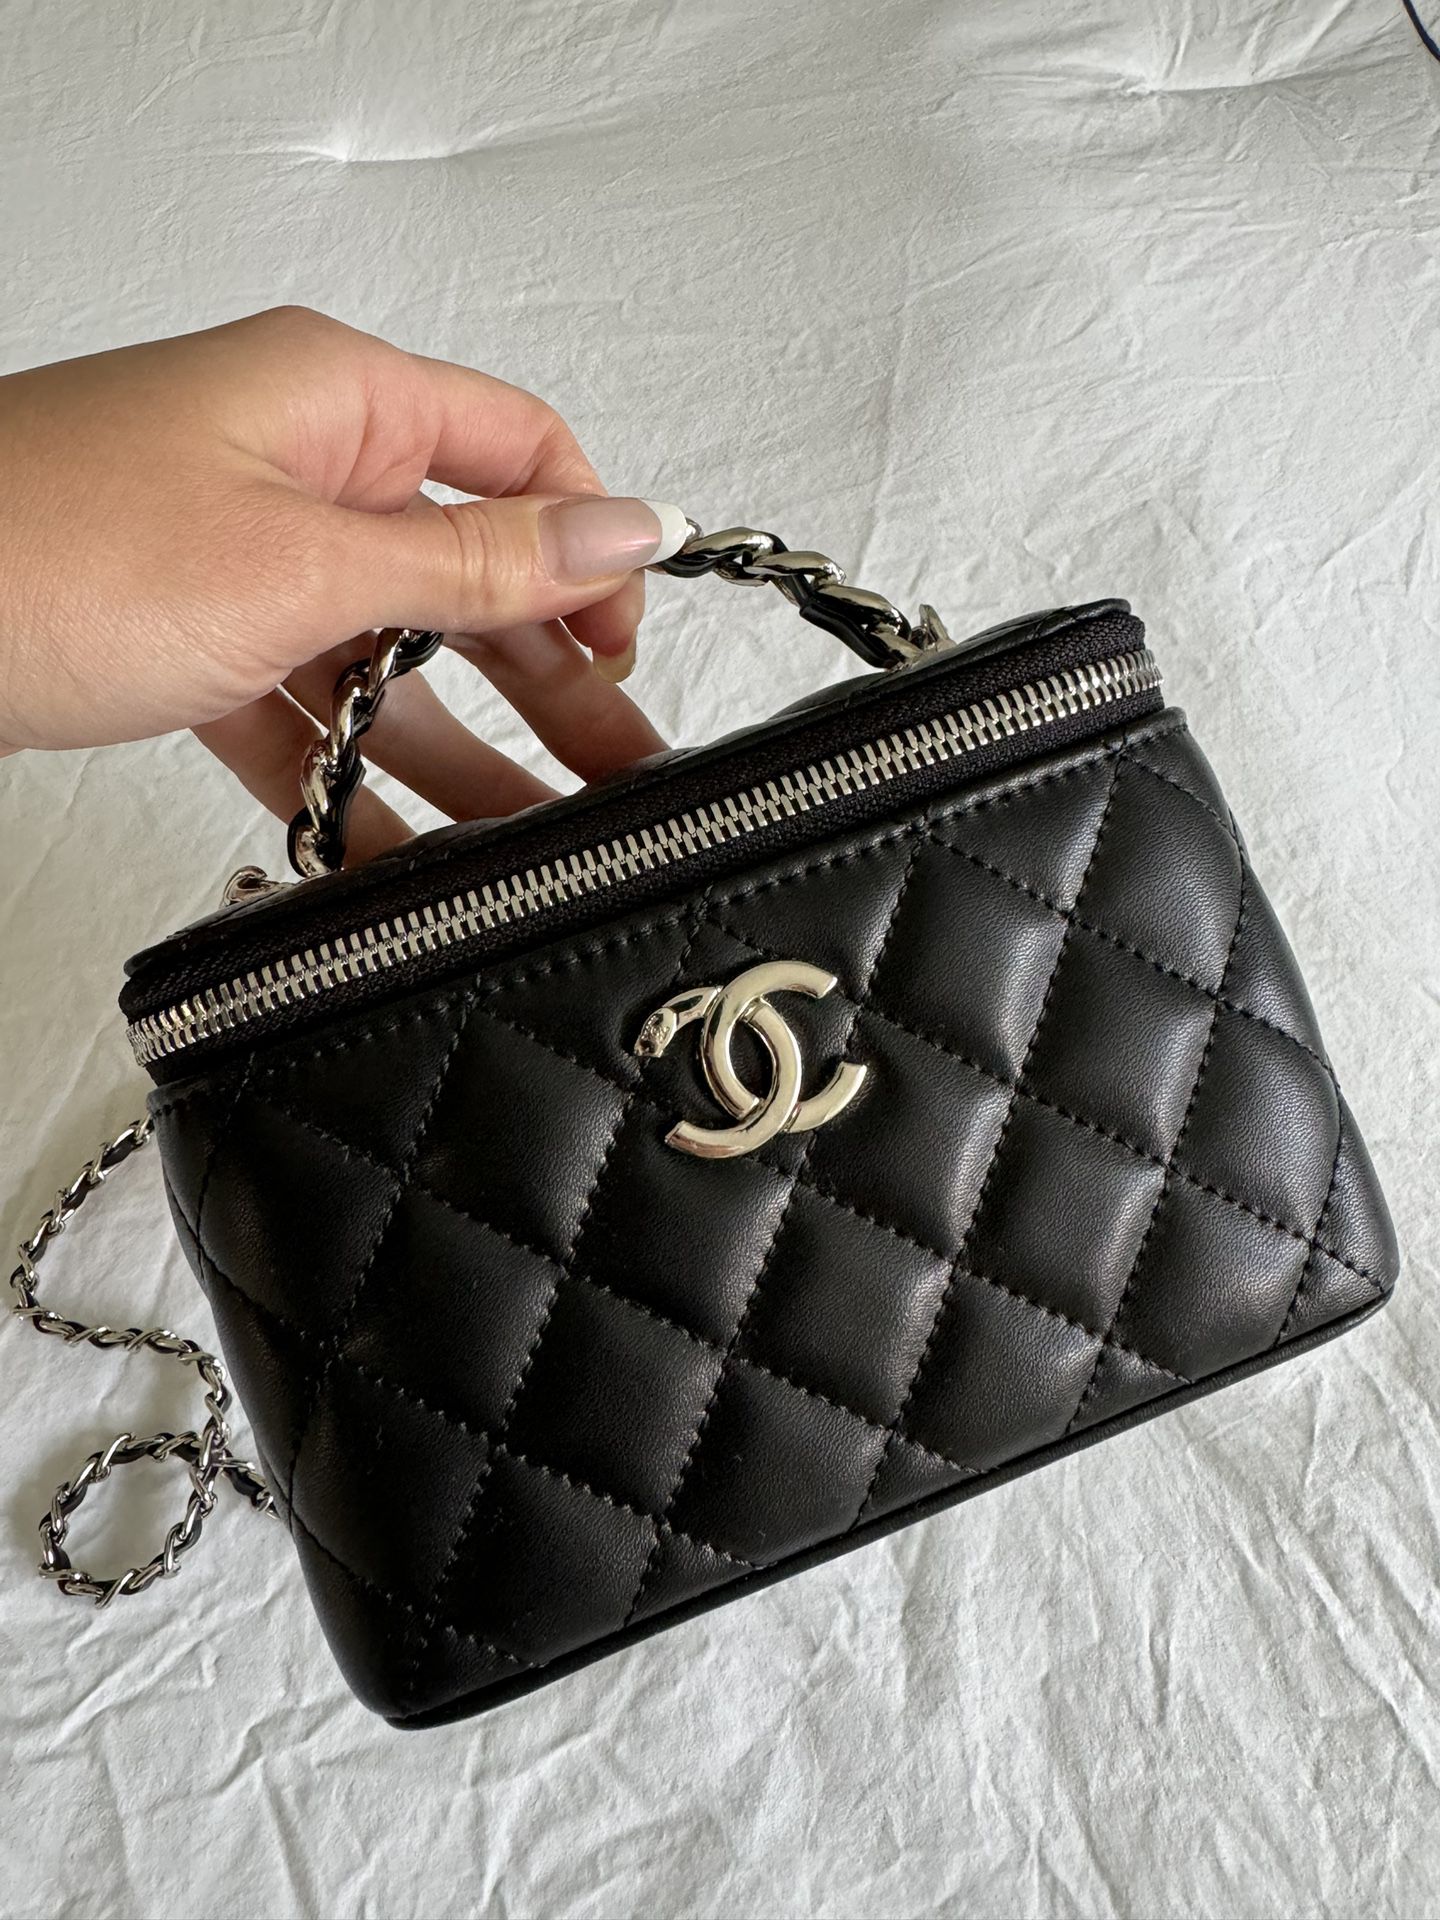 Chanel vanity bag